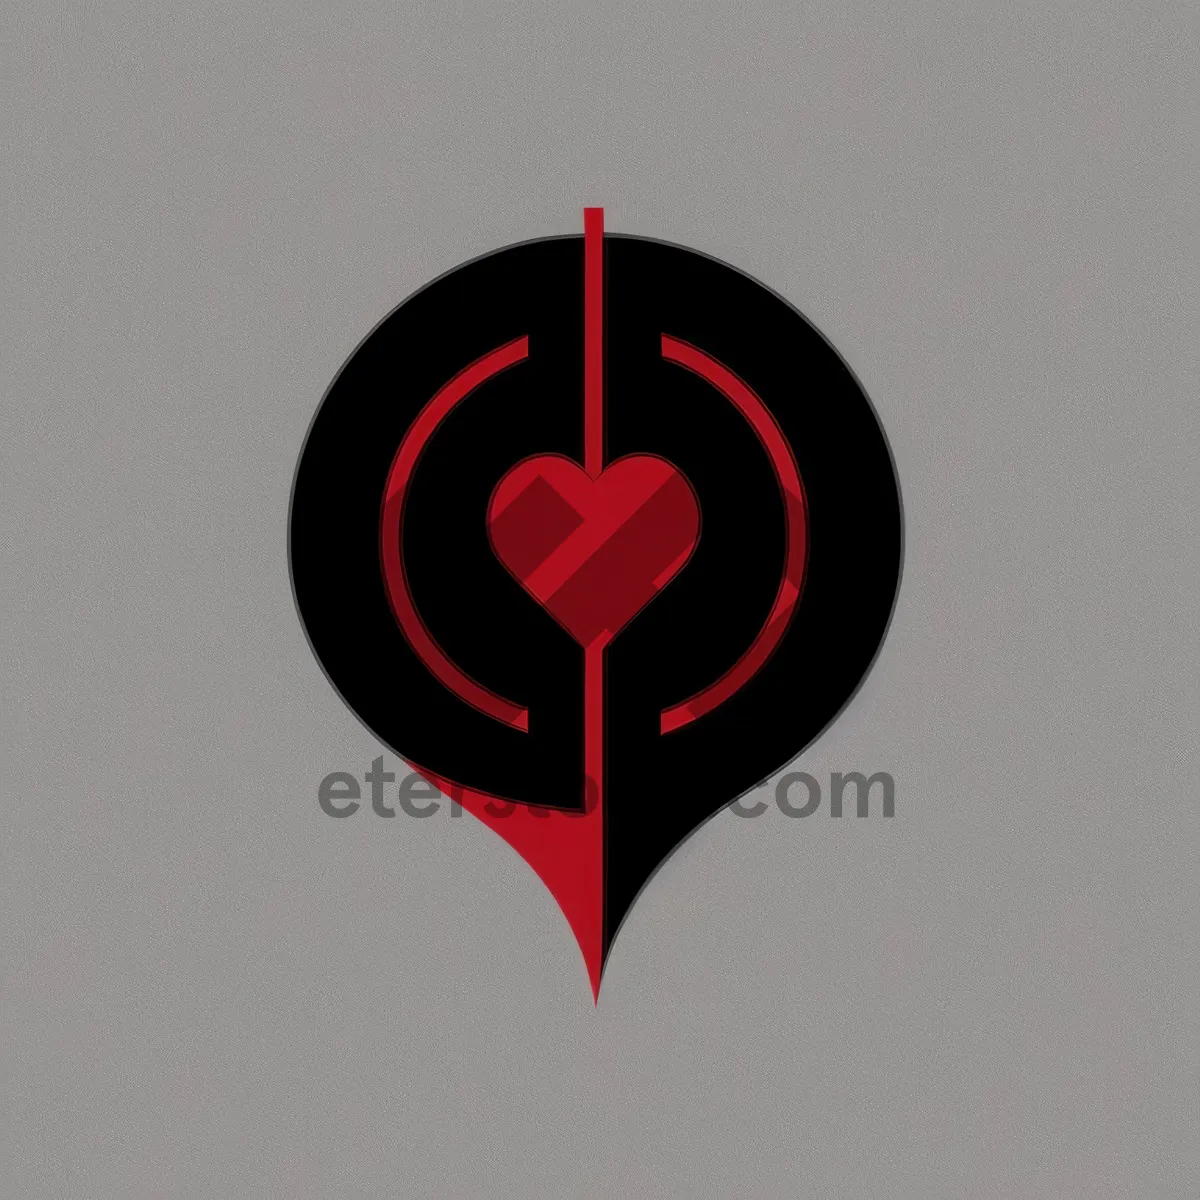 Picture of Heartfelt Love Emblem: A Symbolic Flag Icon